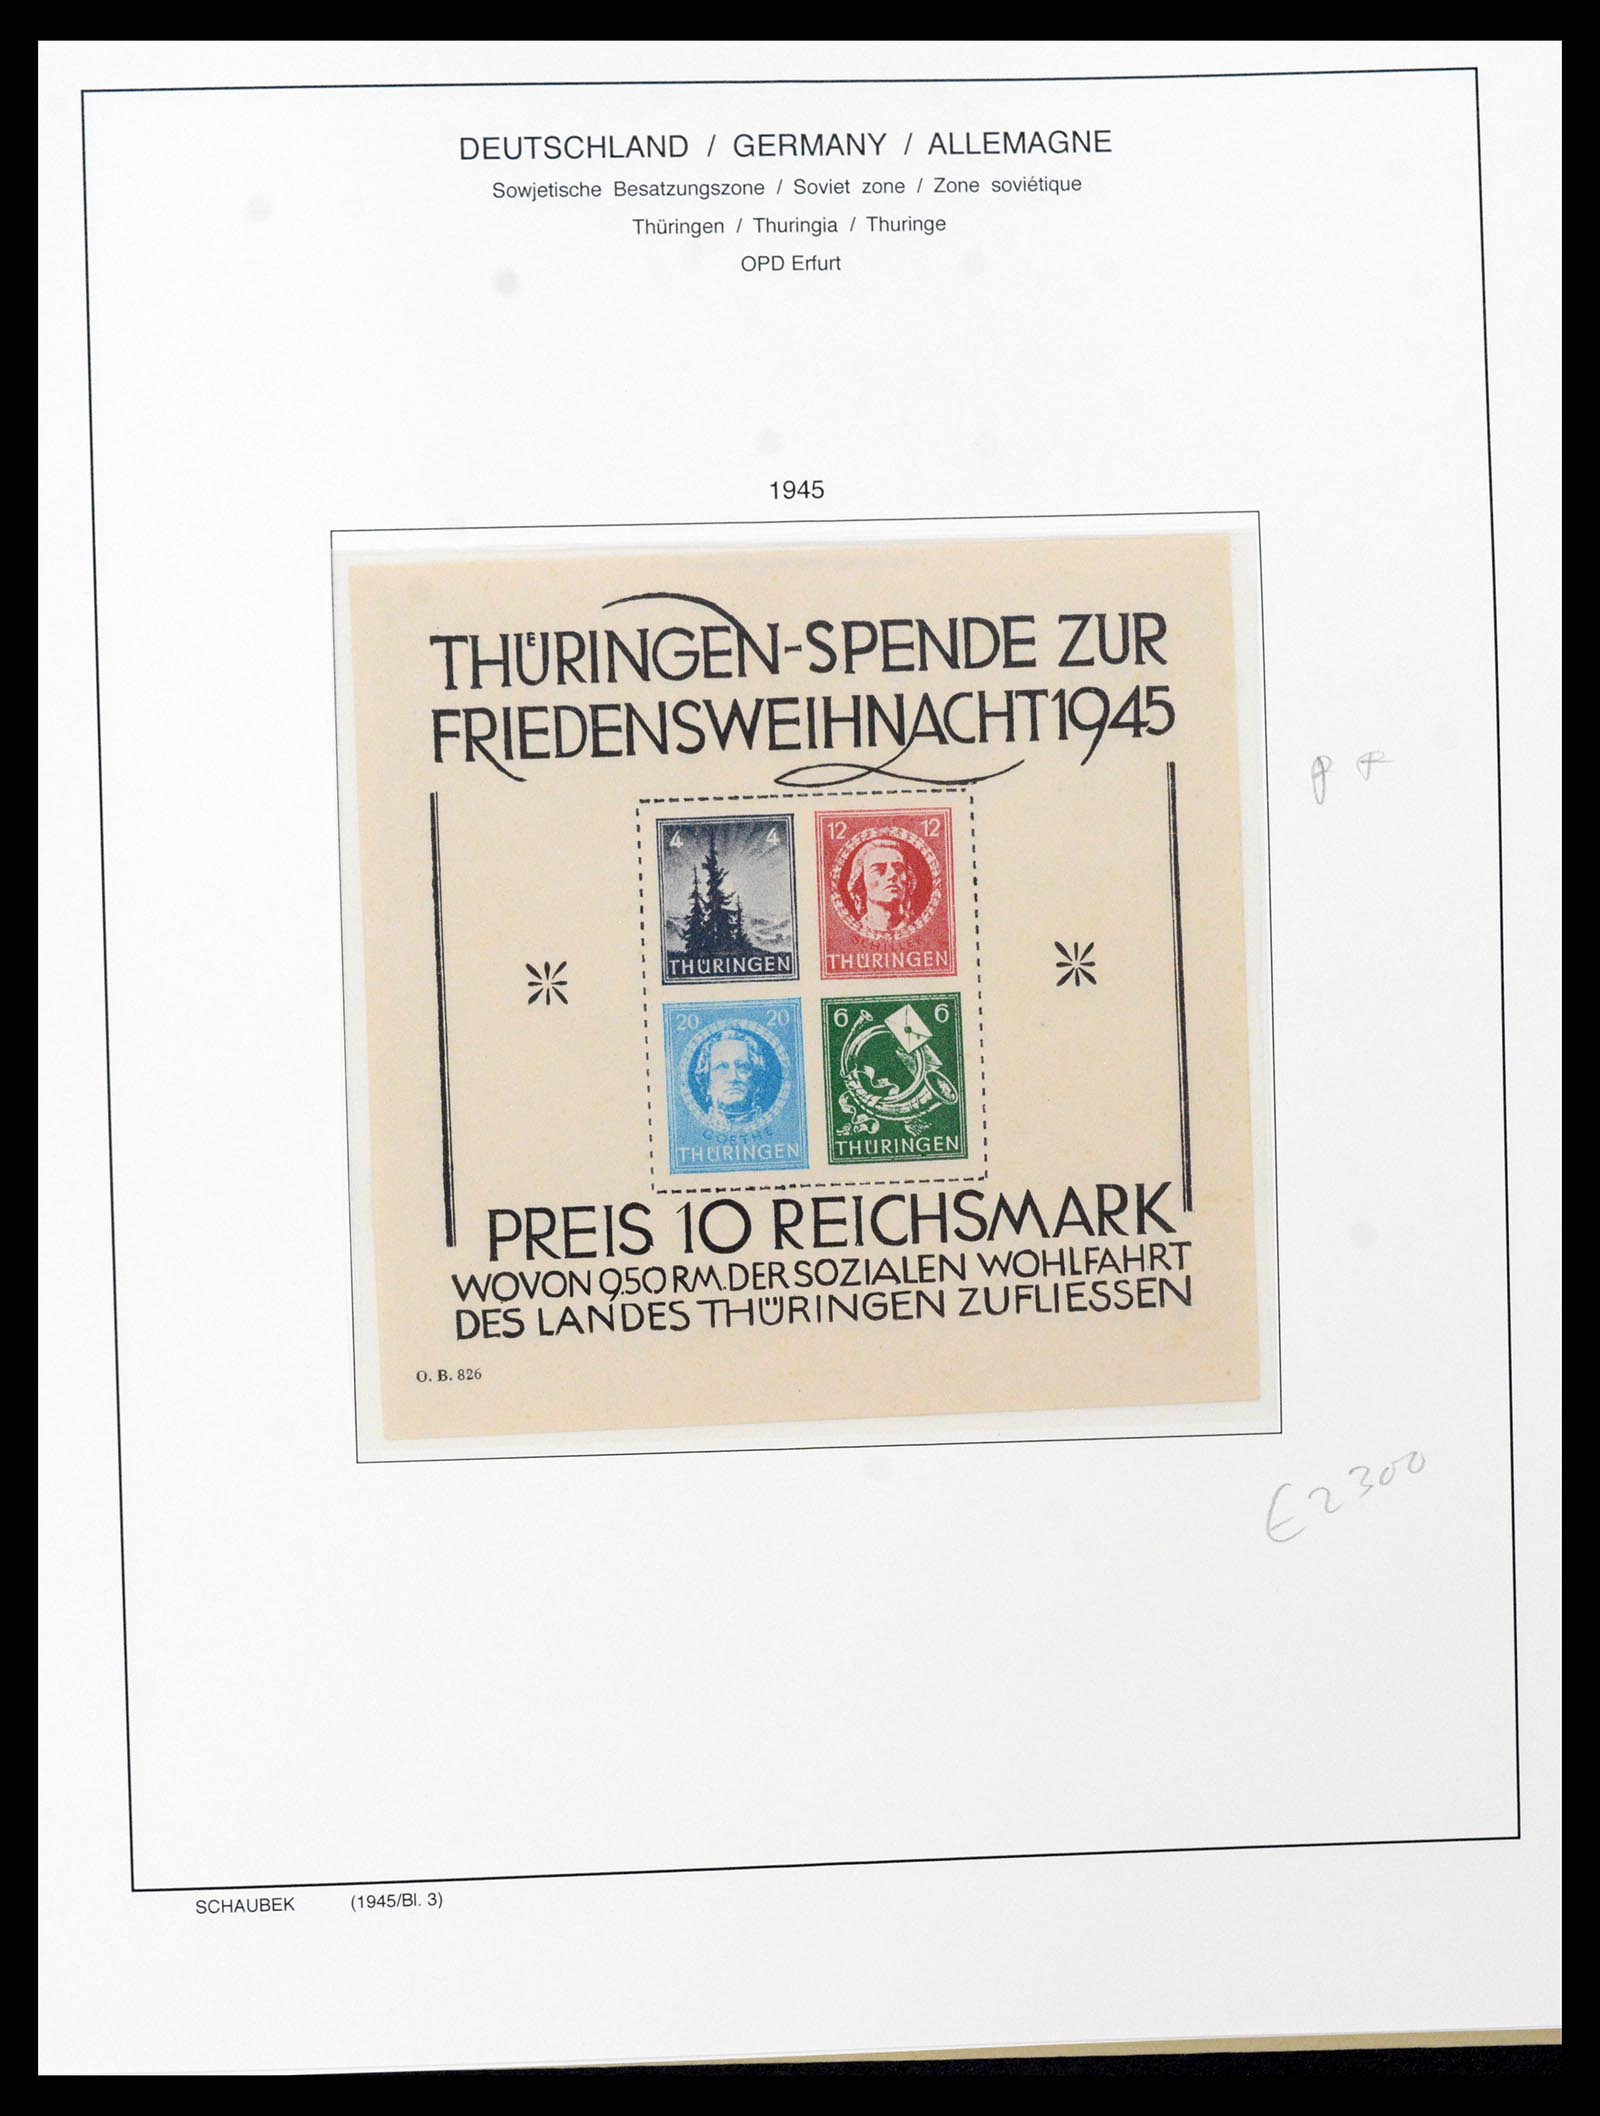 37645 034 - Stamp collection 37645 German Zones 1945-1949.